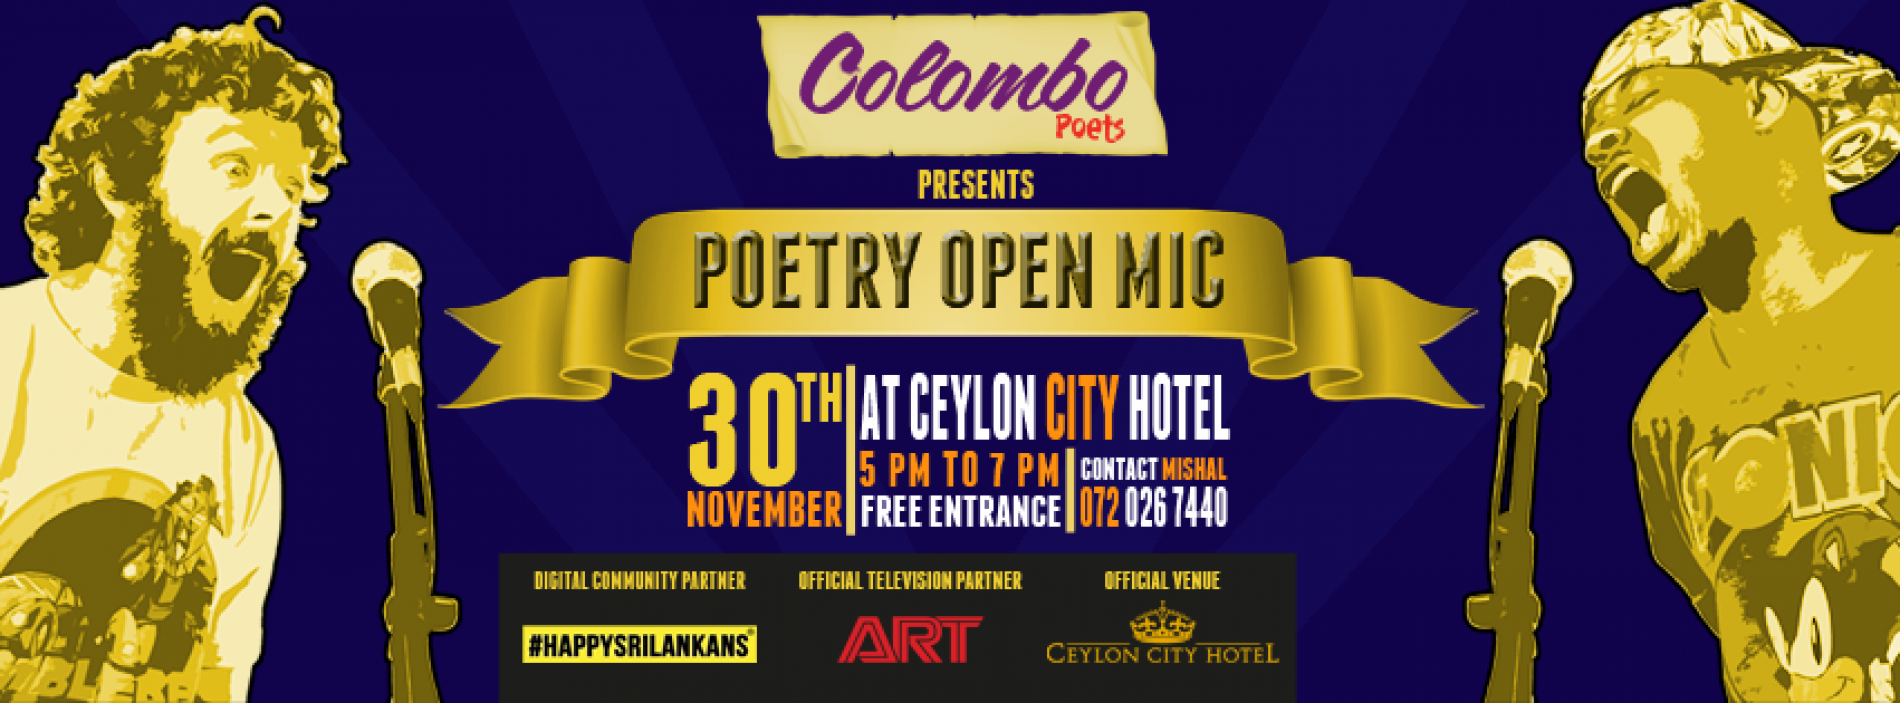 Colombo Poets Presents Poetry Open Mic